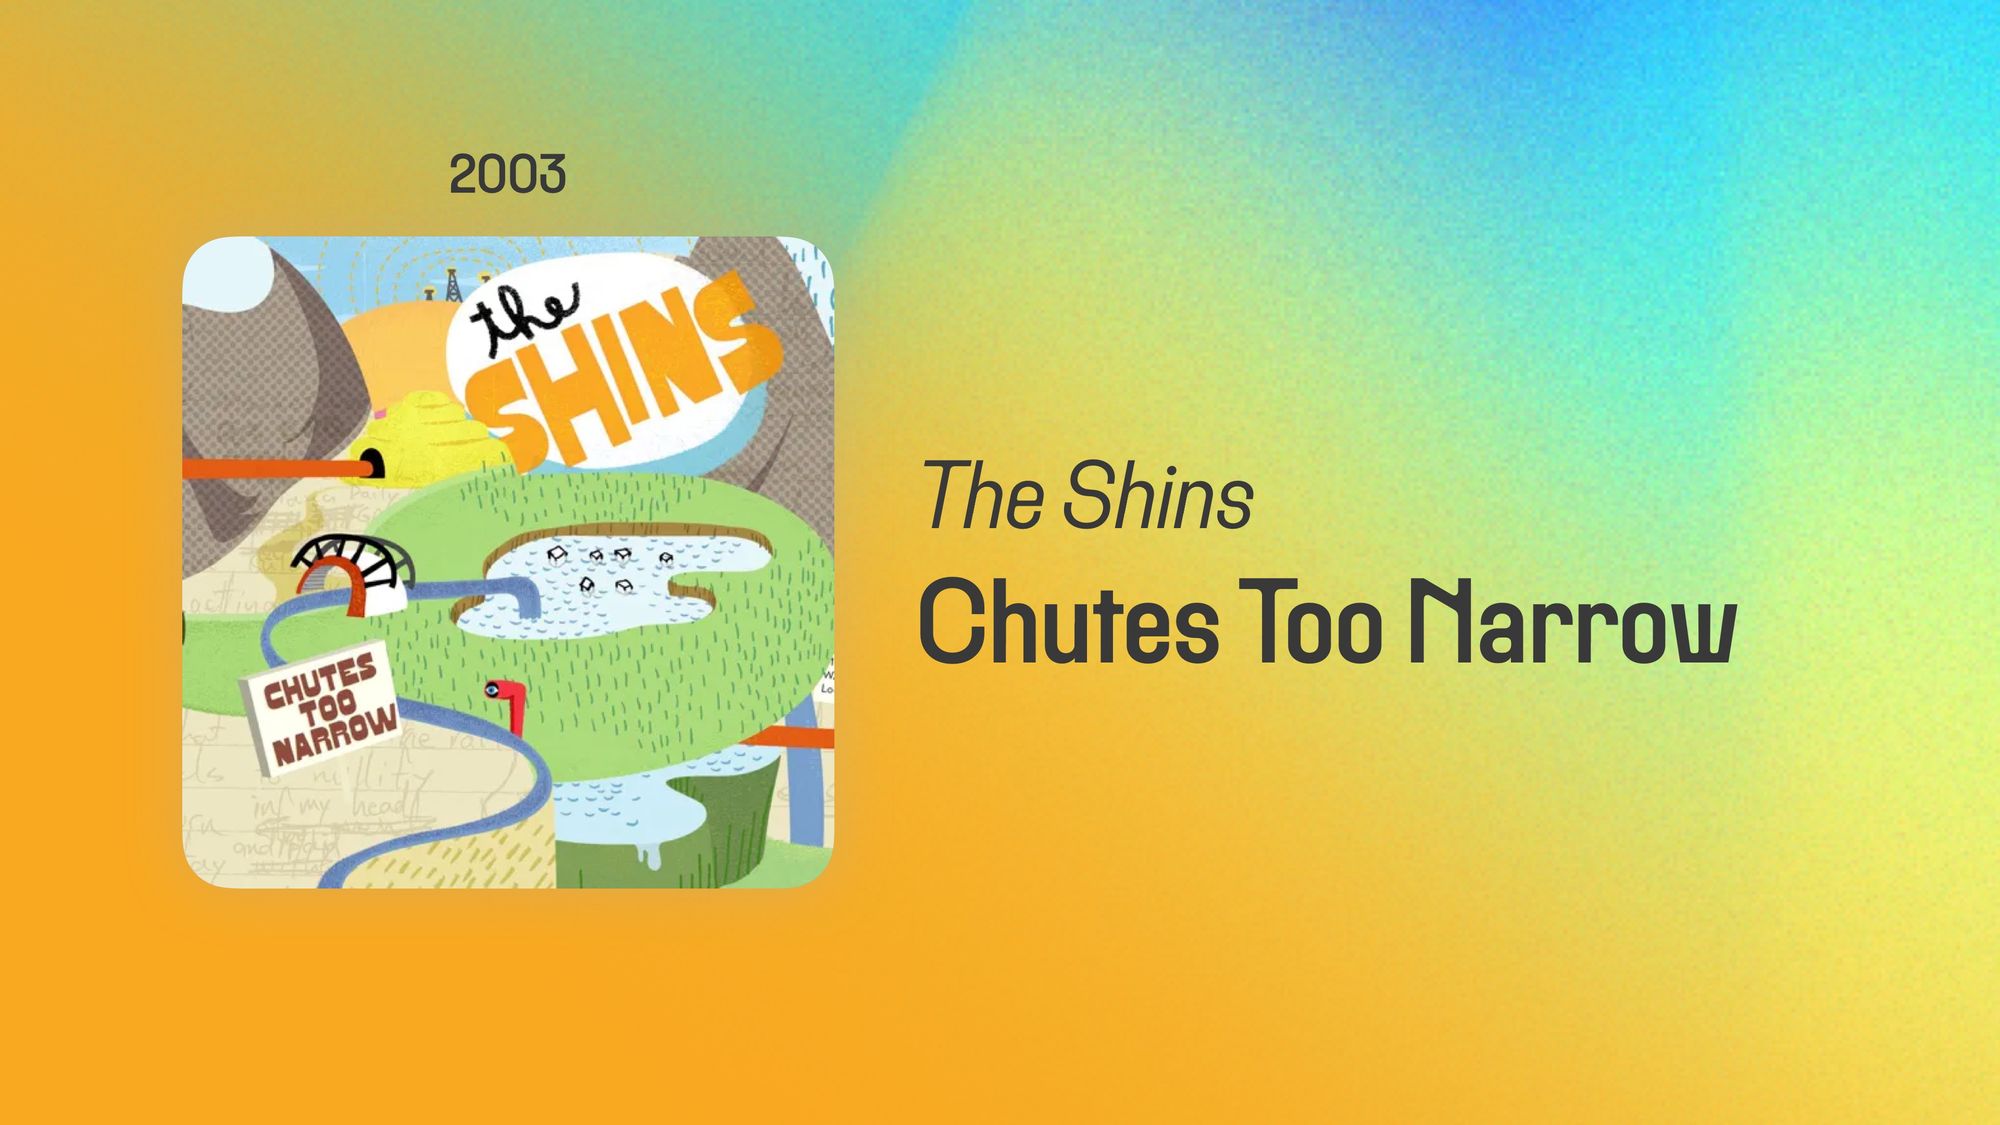 Chutes Too Narrow (365 Albums)